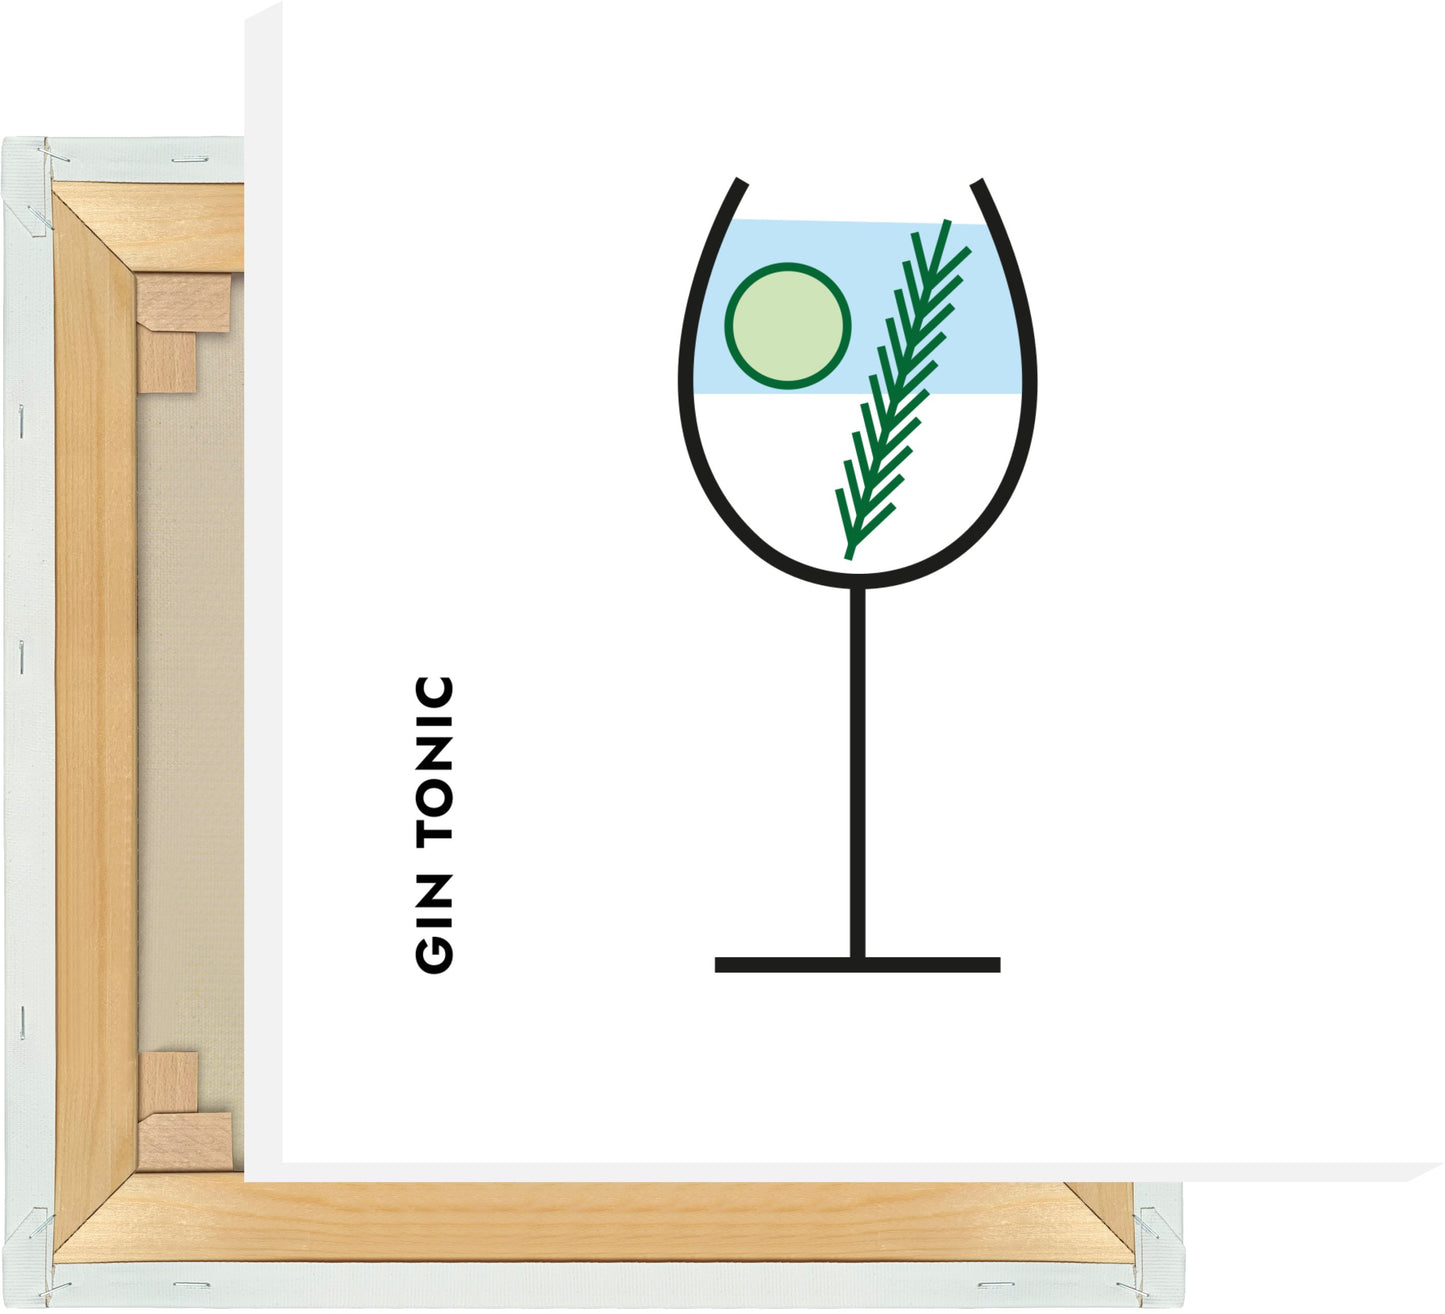 Leinwand Gin Tonic Gurke/Rosmarin im Glas (Bauhaus-Style)